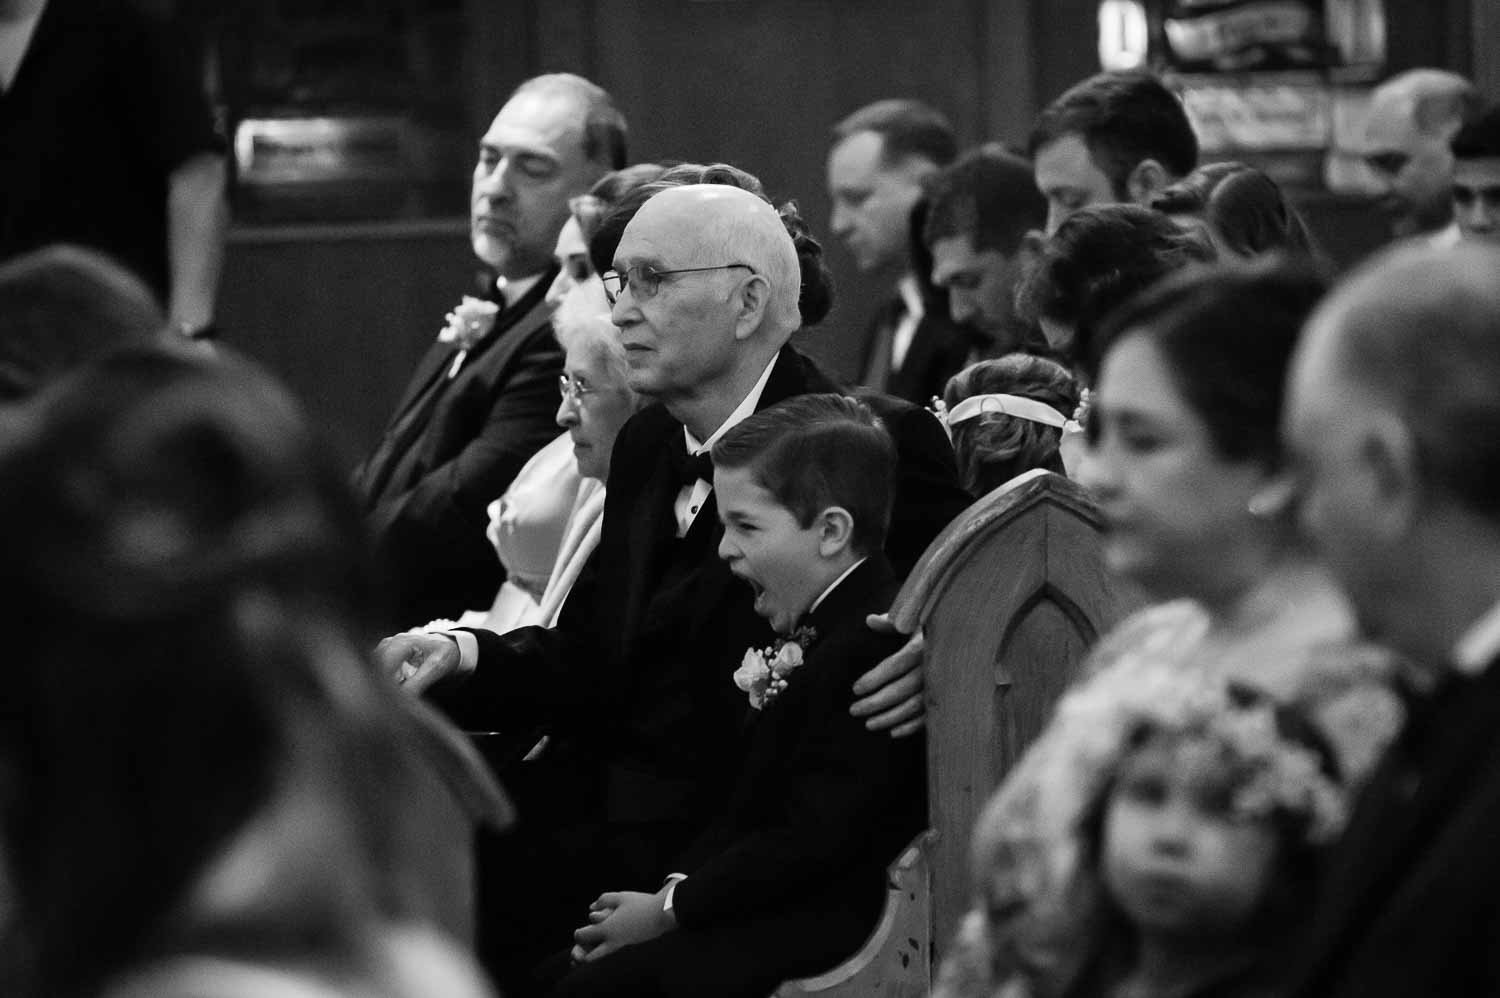 026-St Josephs Catholic Wedding Ceremony San Antonio Reception Grand BallroomSan Antonio -Leica photographer-Philip Thomas Photography